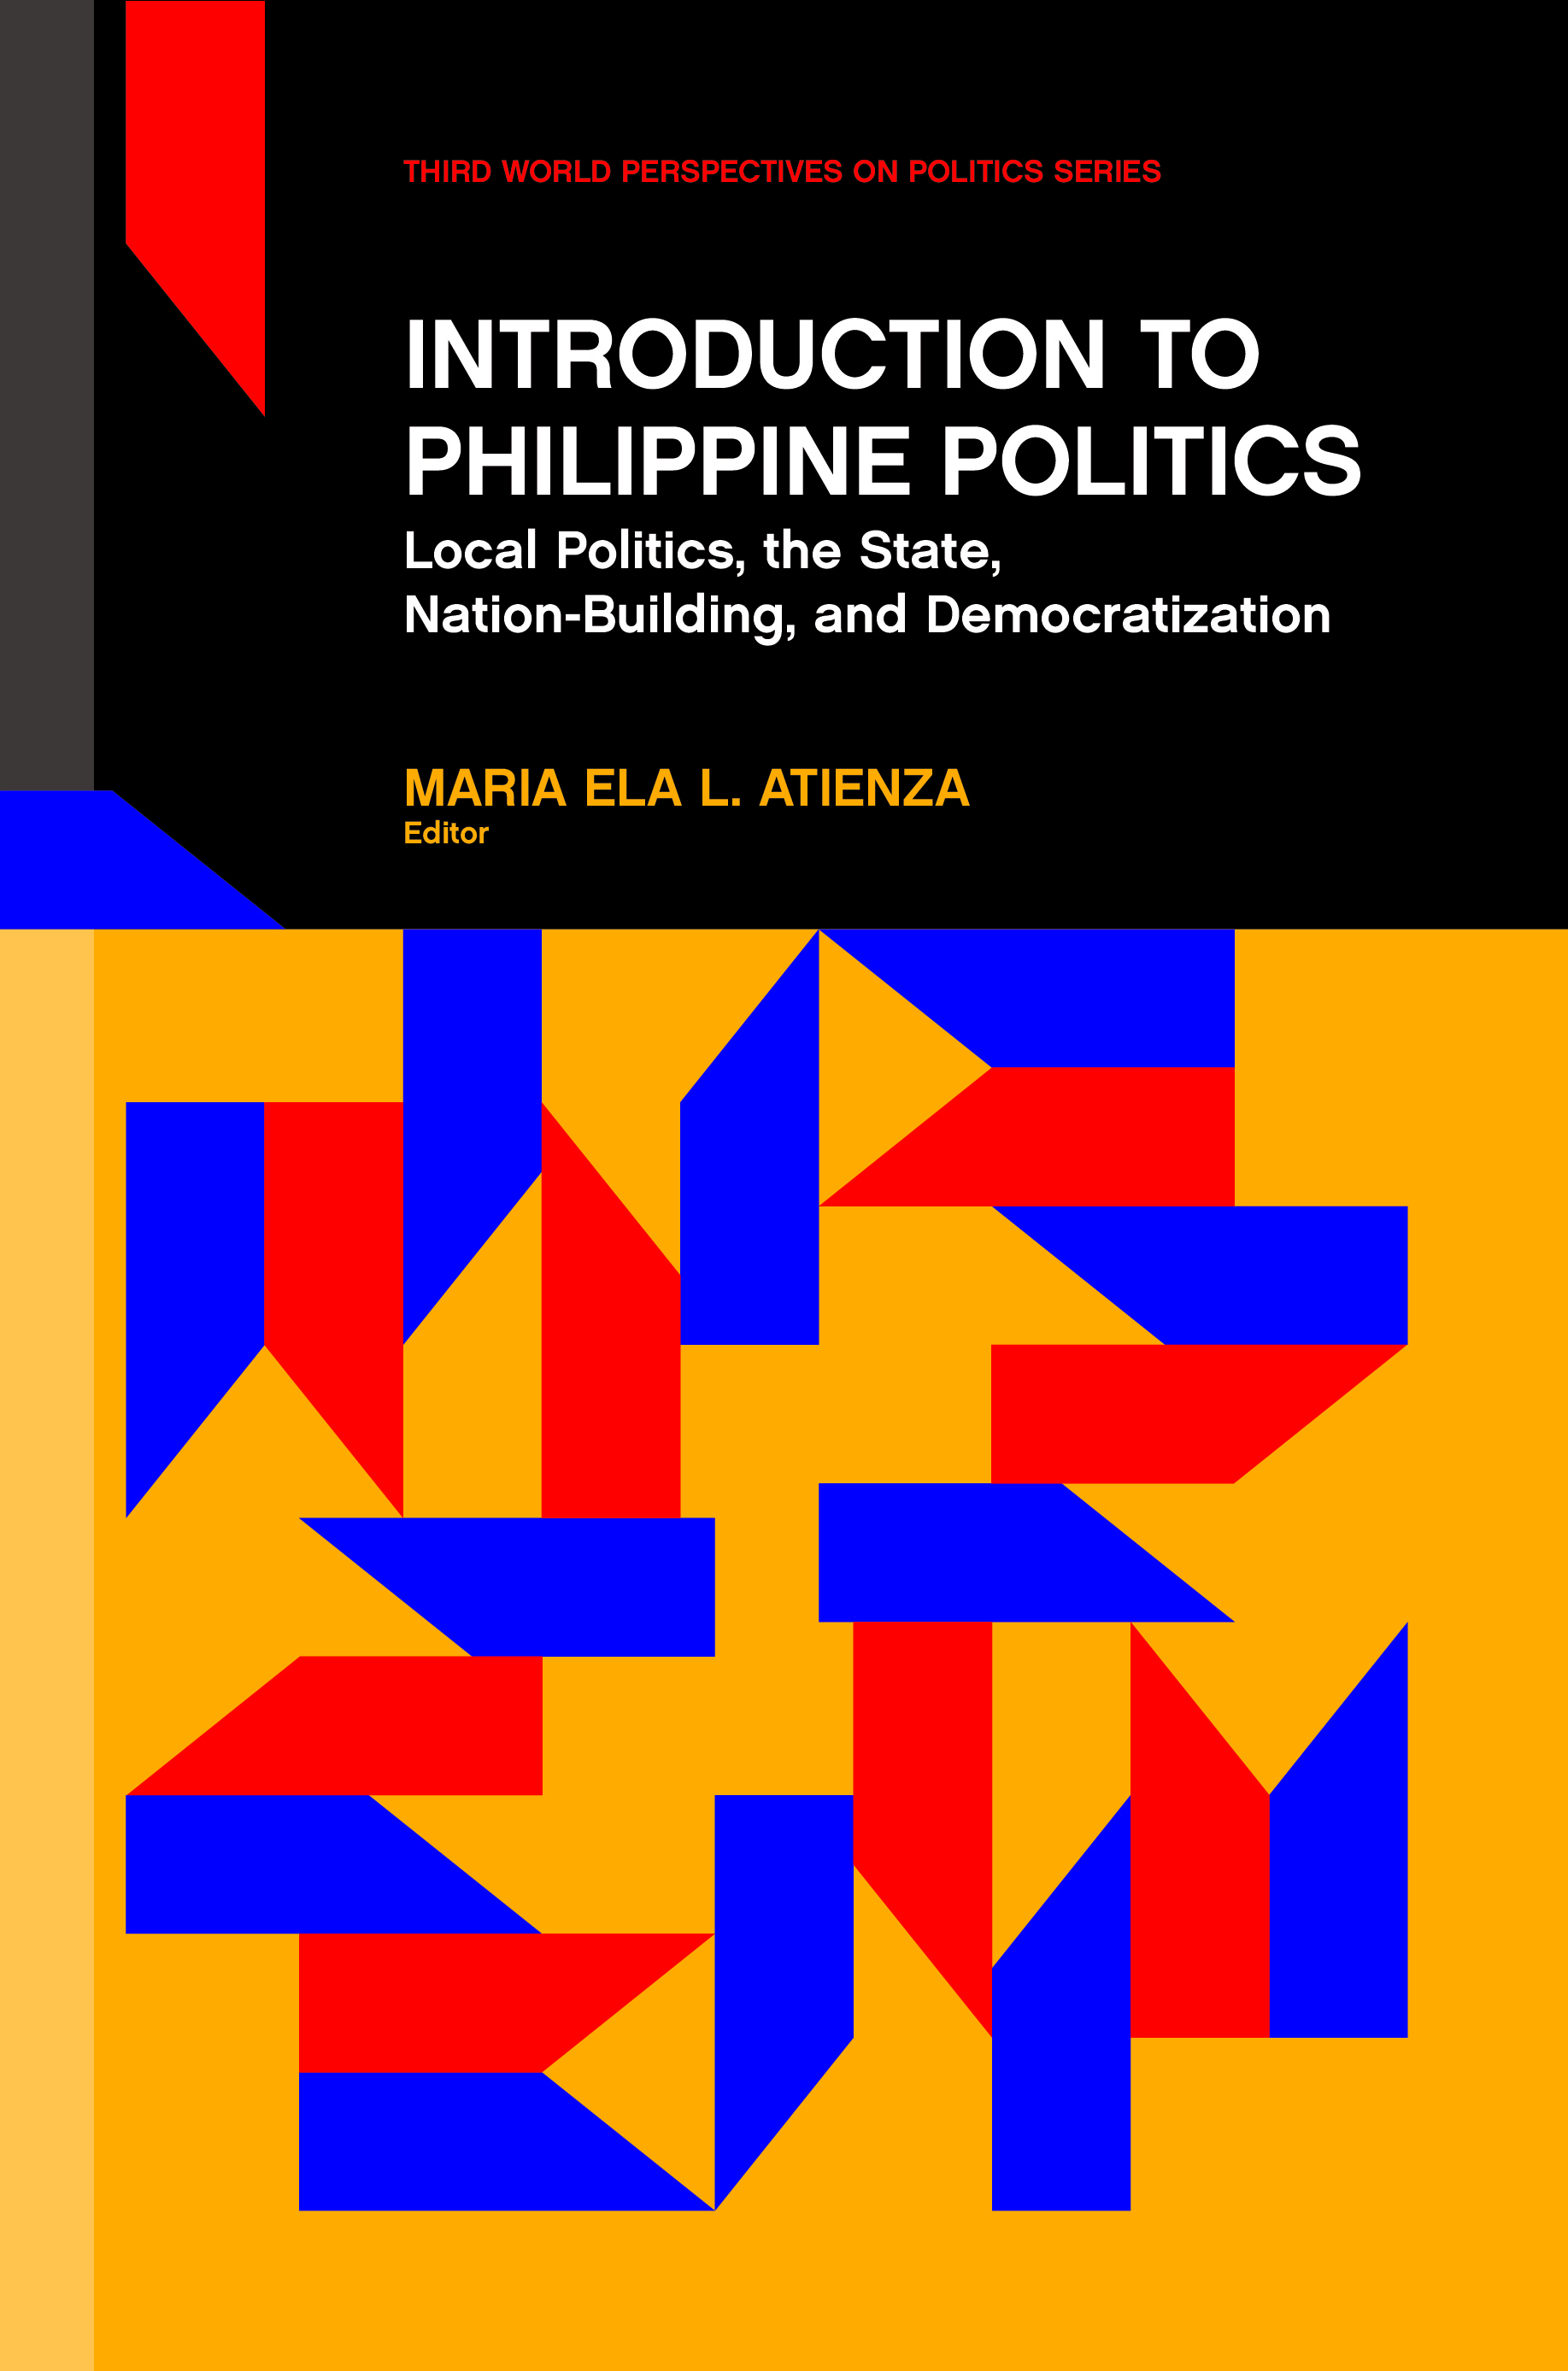 argumentative essay about politics in the philippines